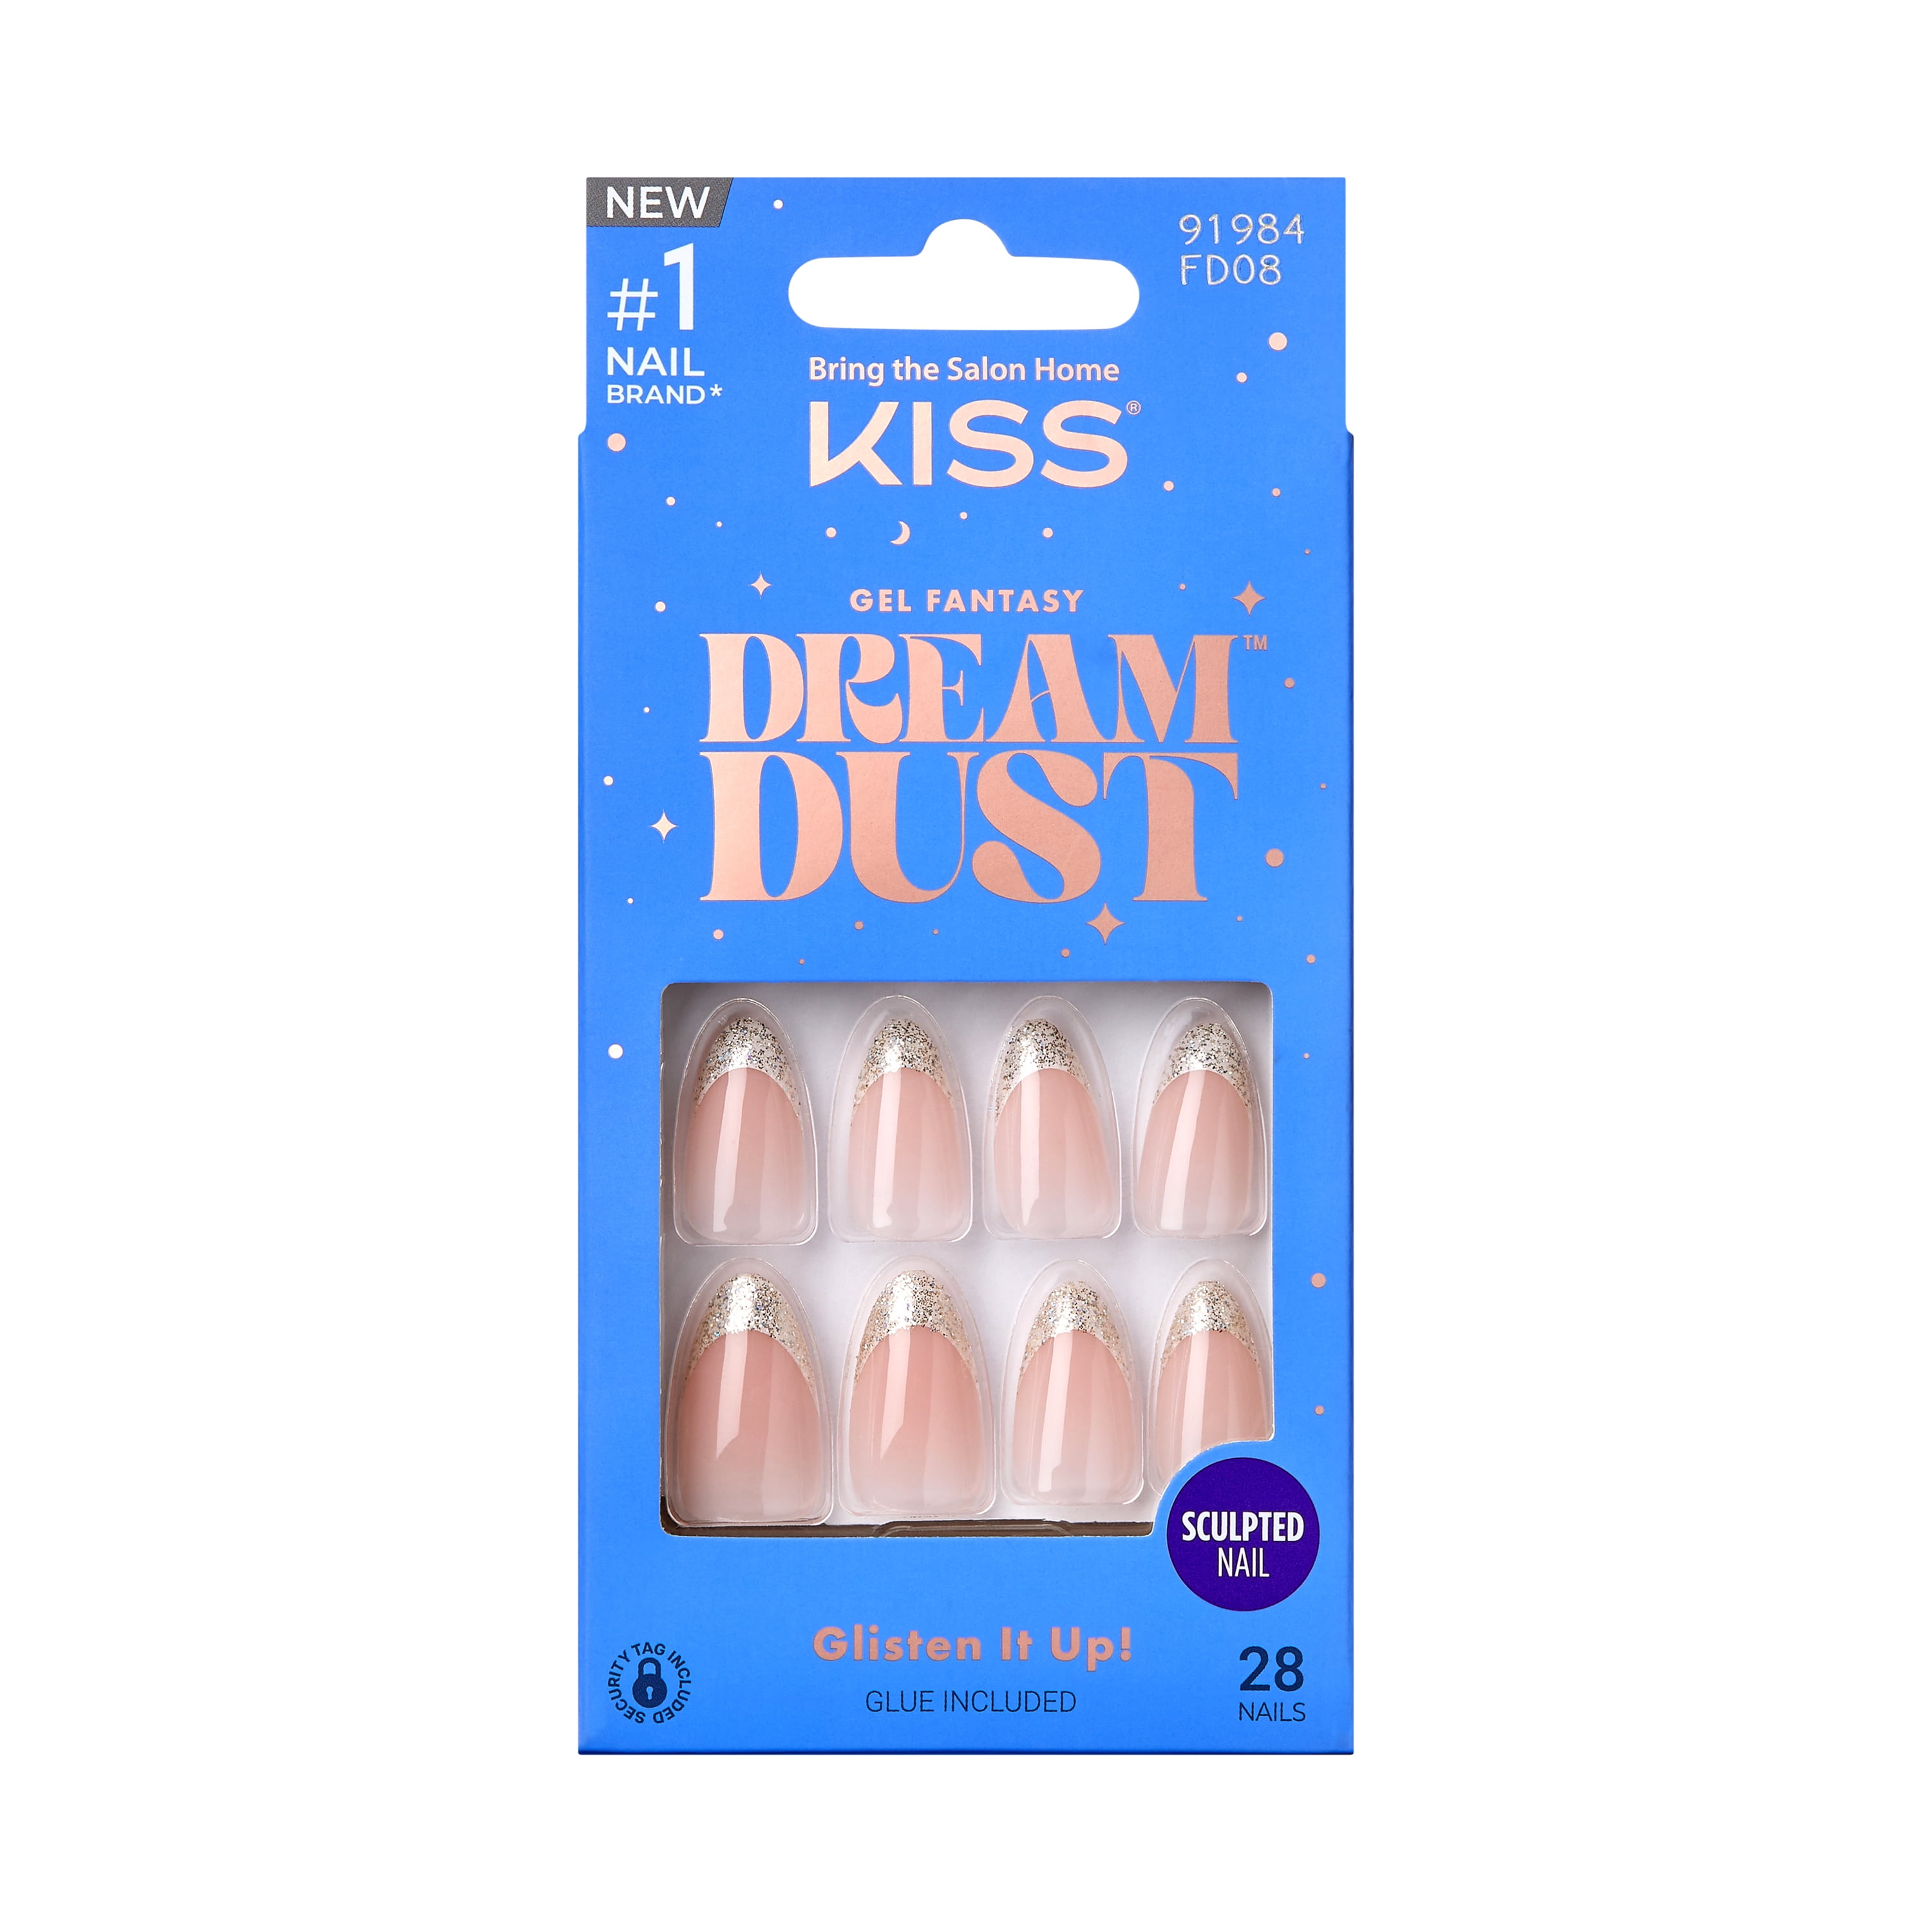 Kiss press on nails from Walmart 💖 : r/Nails